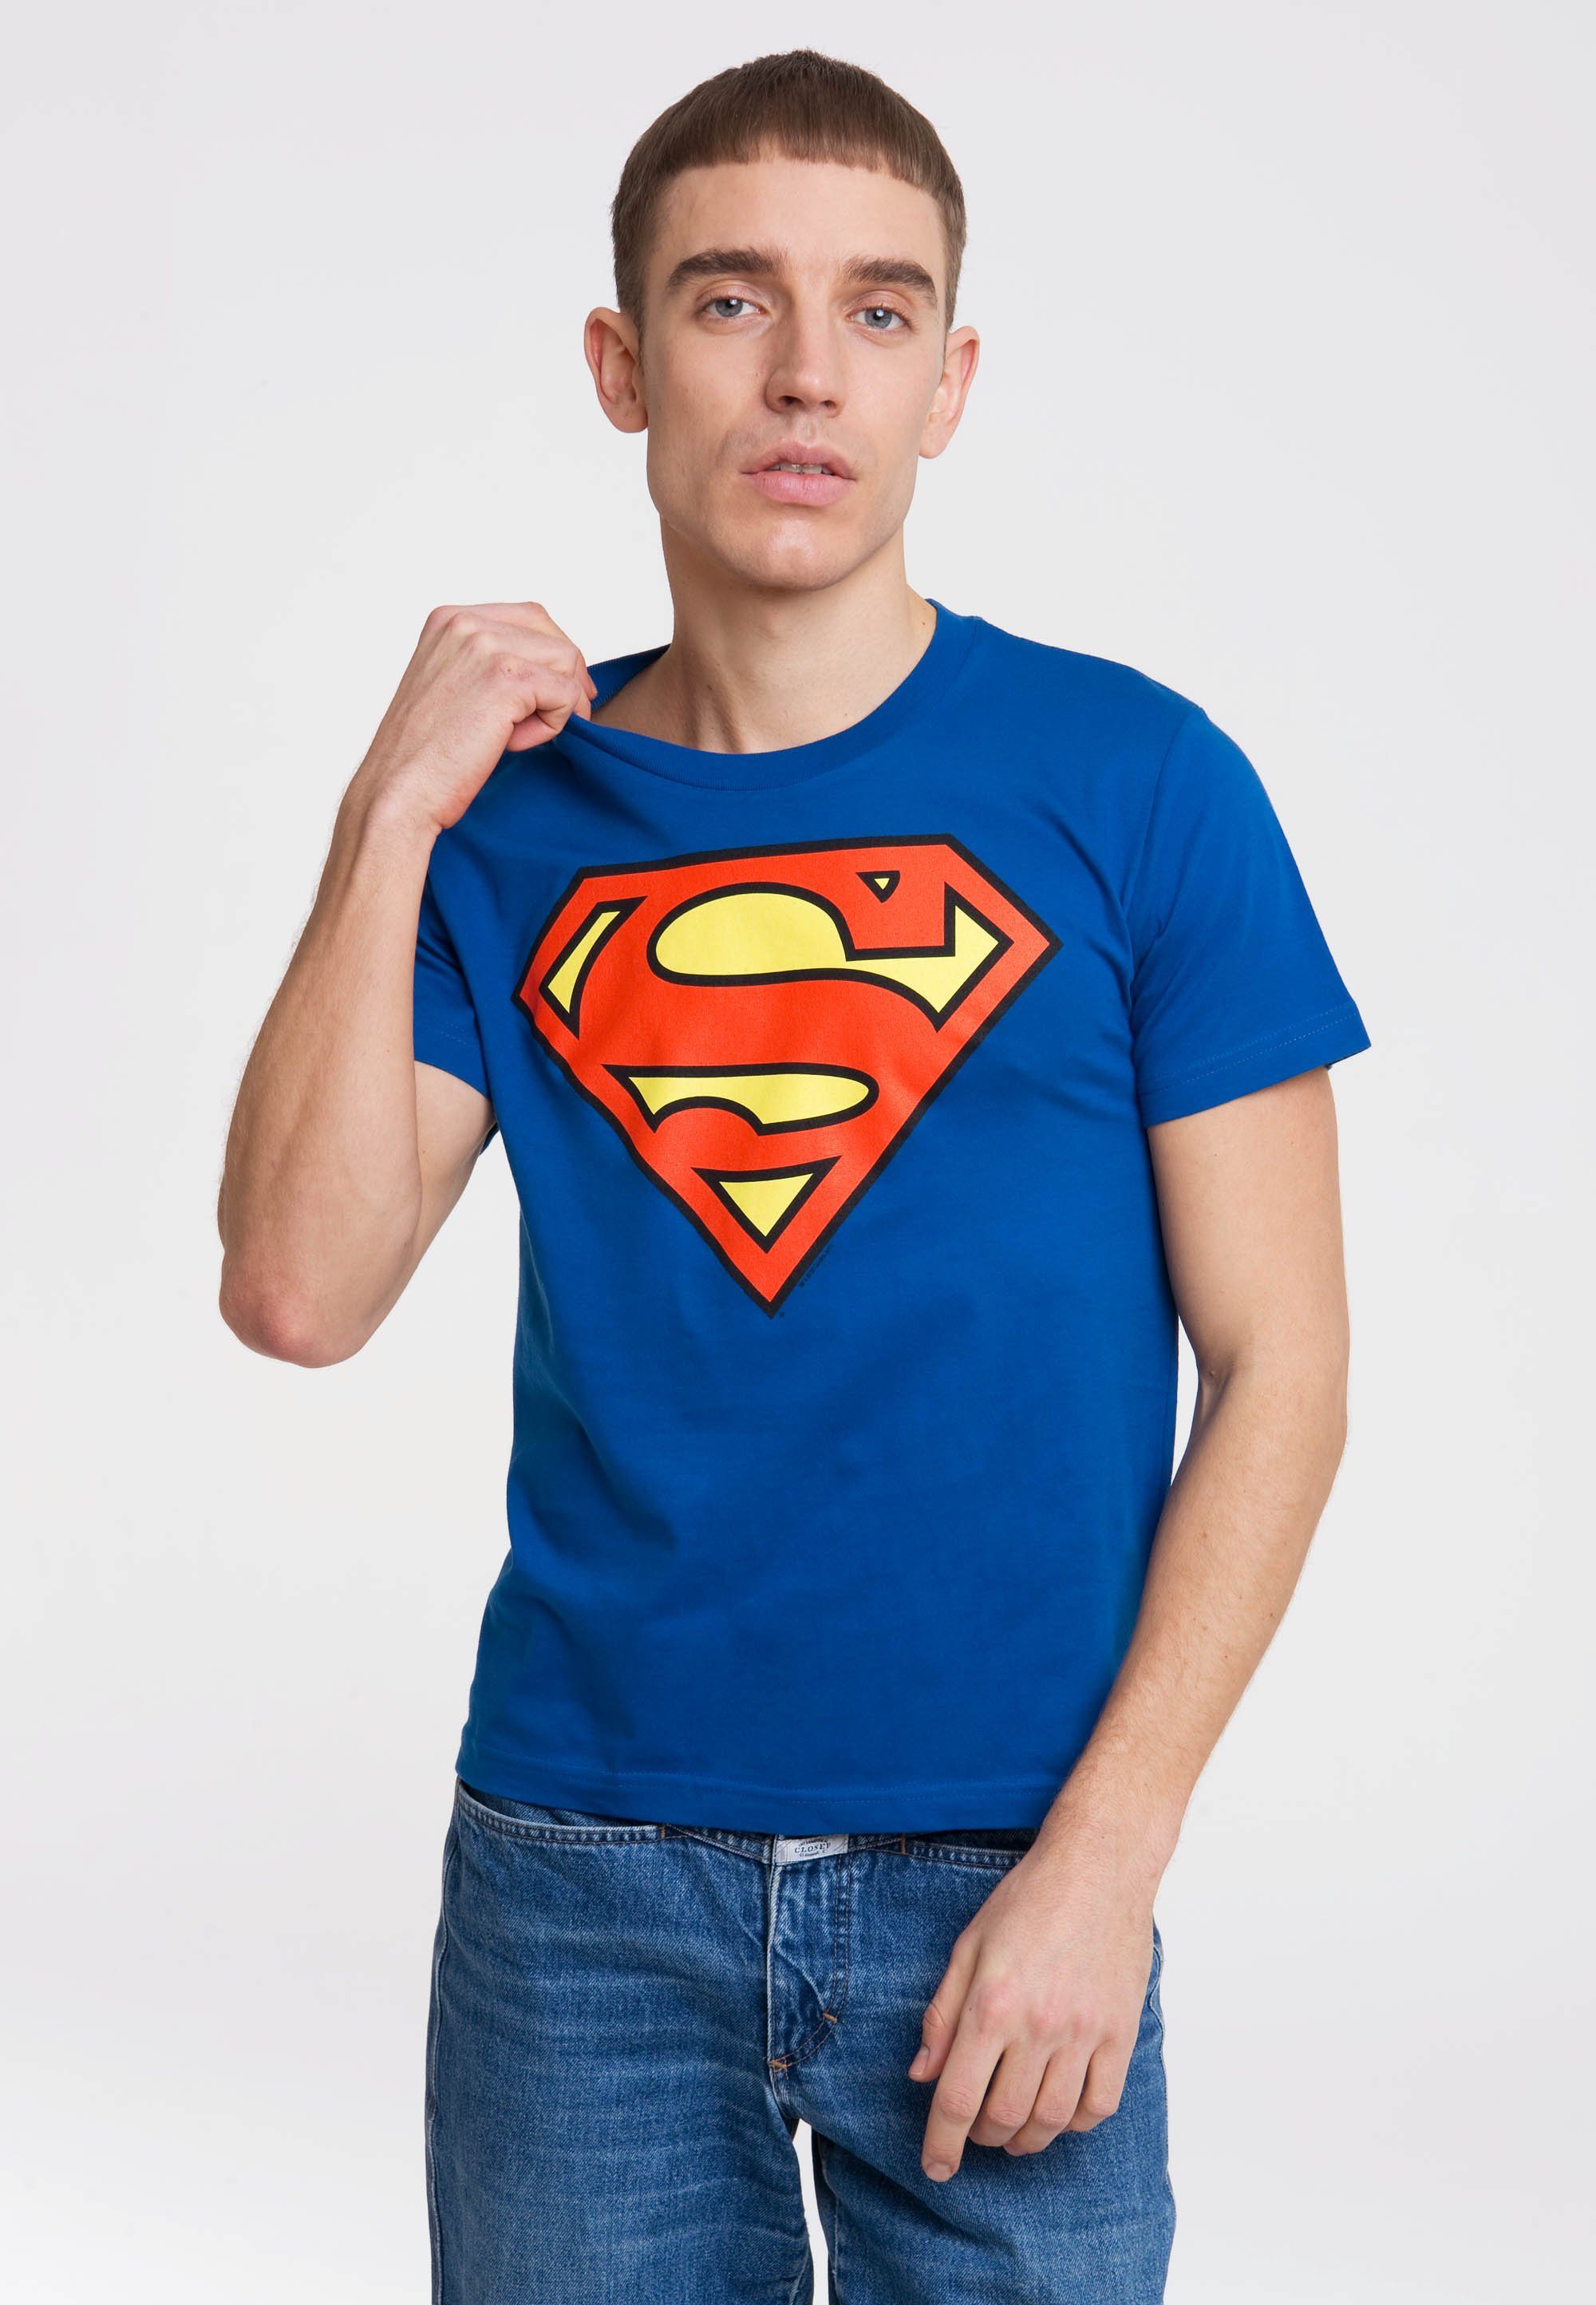 LOGOSHIRT T-Shirt SUPERMAN - LOGO Klassischer Rundhals-Ausschnitt mit Frontprint, coolem optimale Passform für